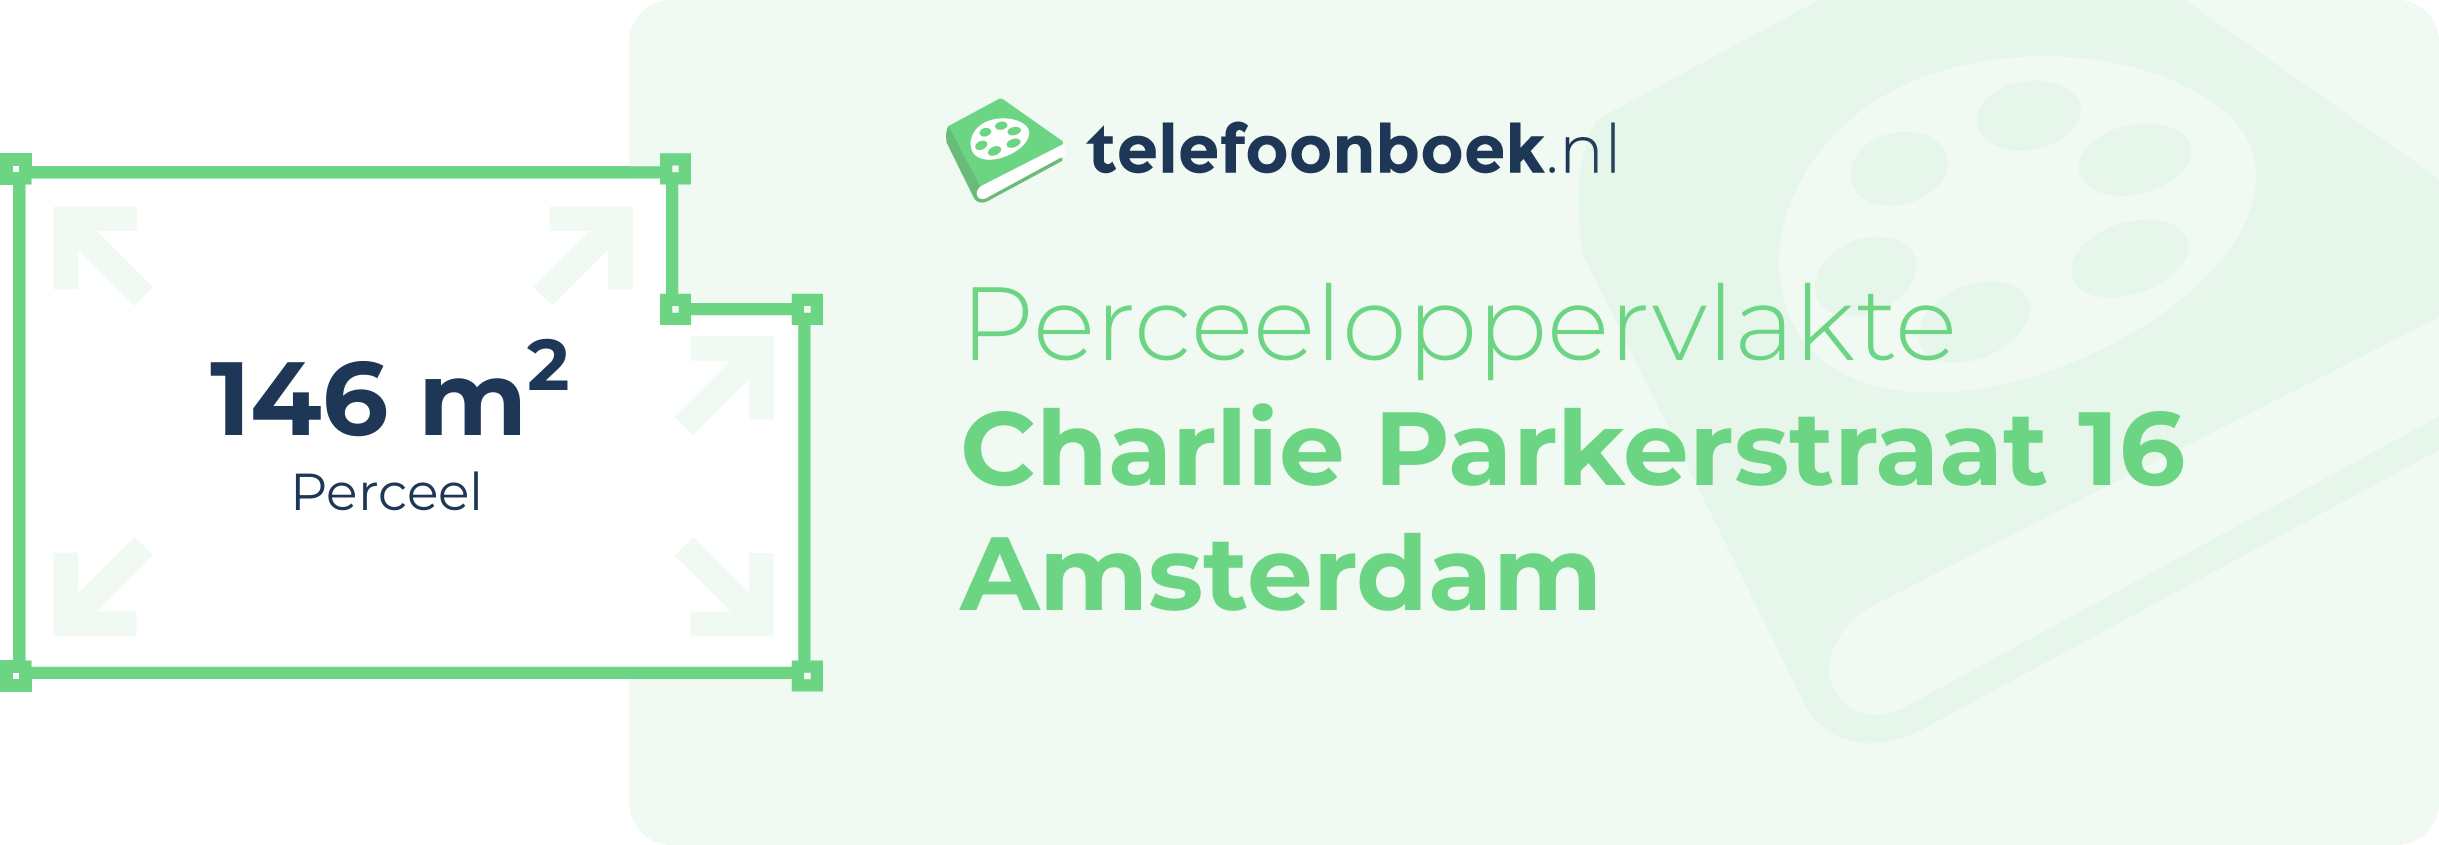 Perceeloppervlakte Charlie Parkerstraat 16 Amsterdam